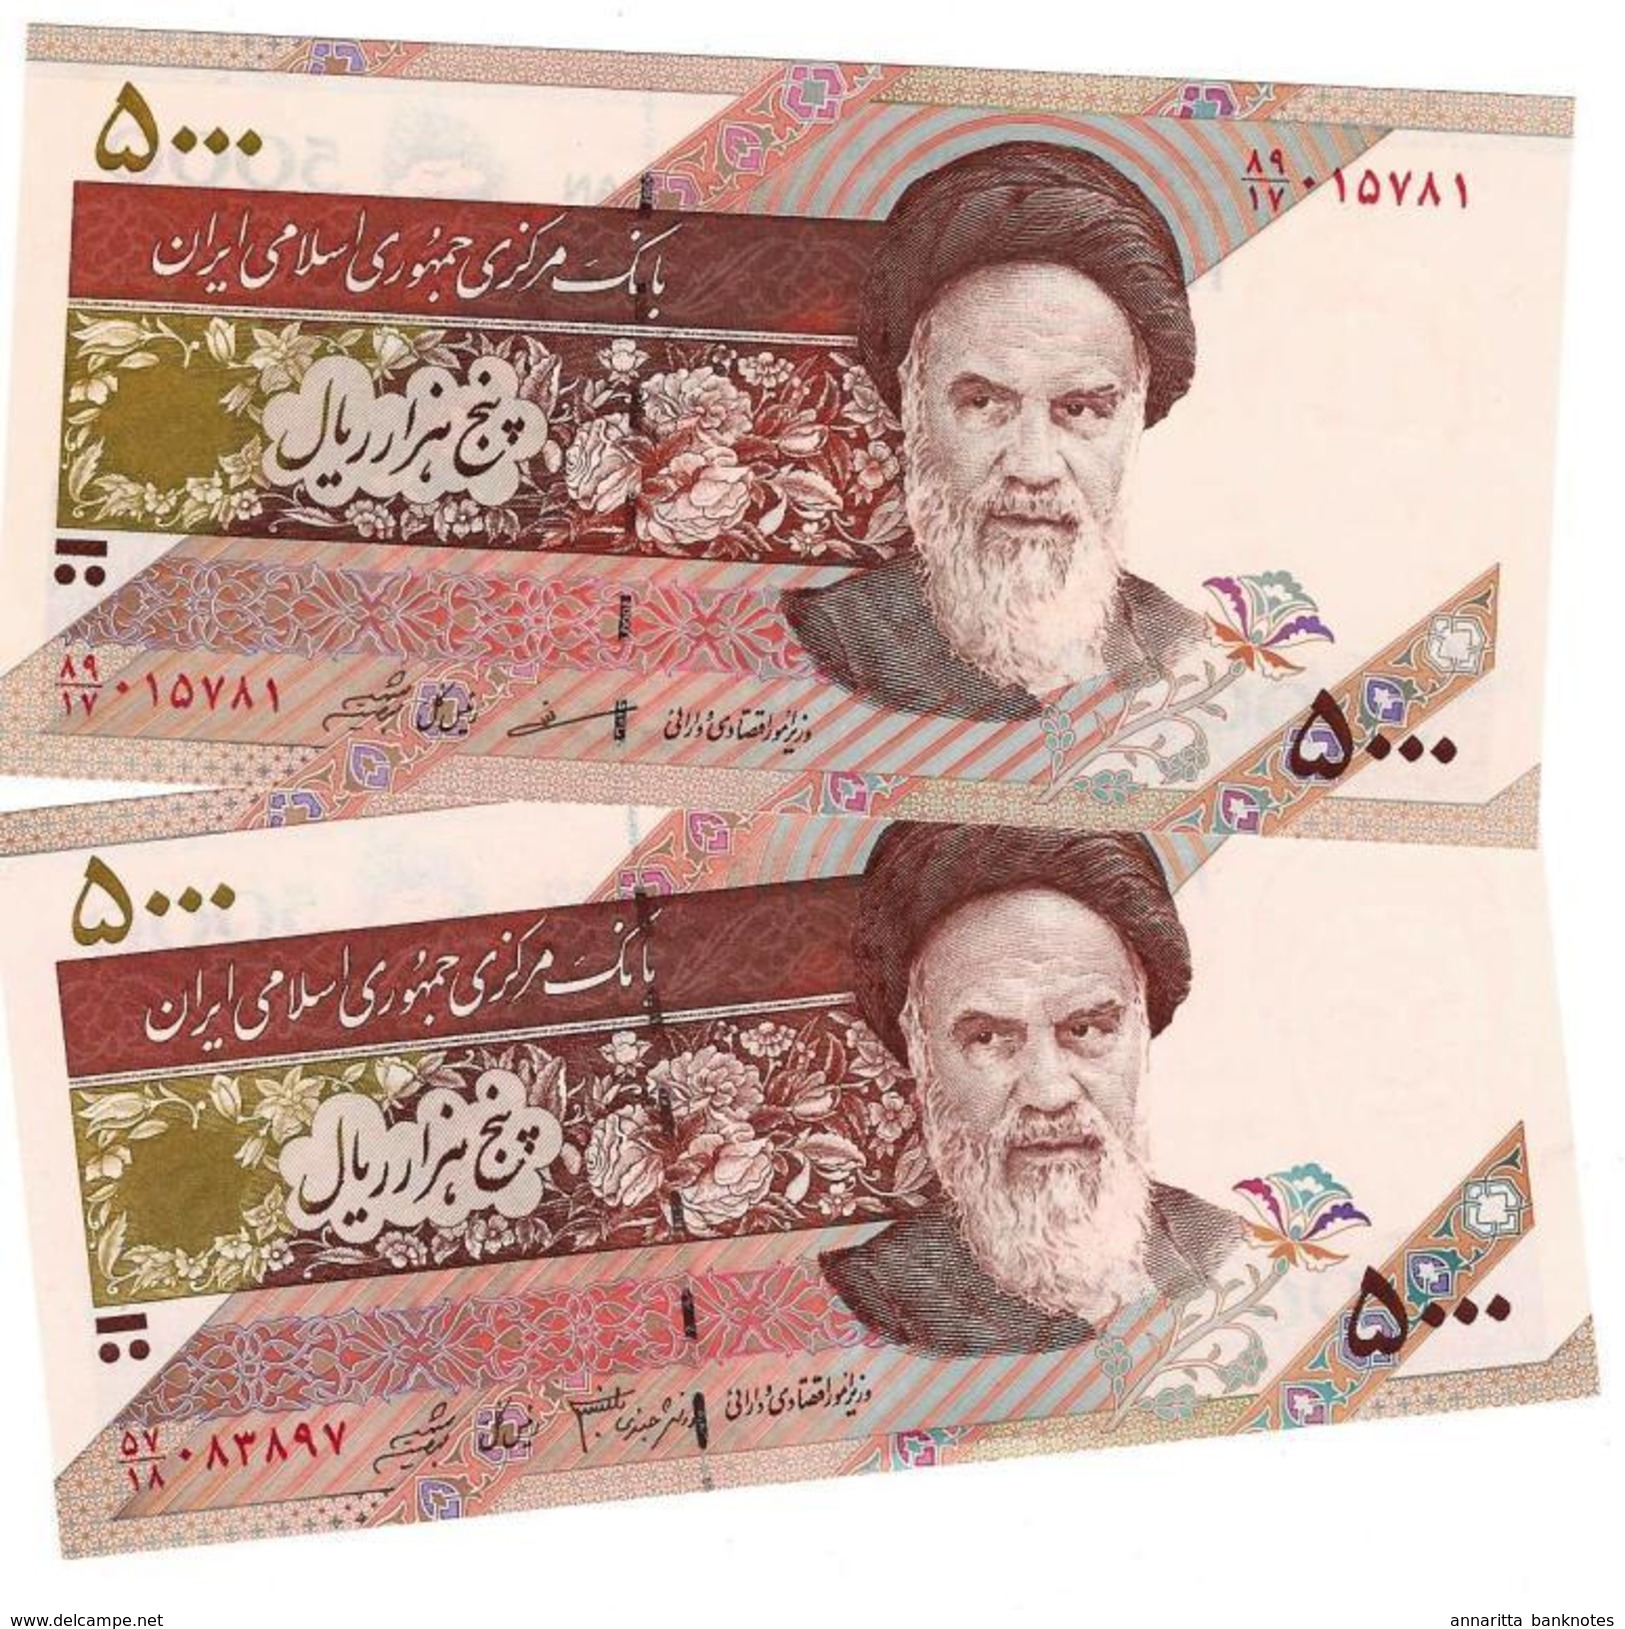 IRAN 5000 RIALS ND (2003 & 2010) P-145e,f UNC 2 TYPES OF SIGN.  [IR280e, IR280f] - Iran